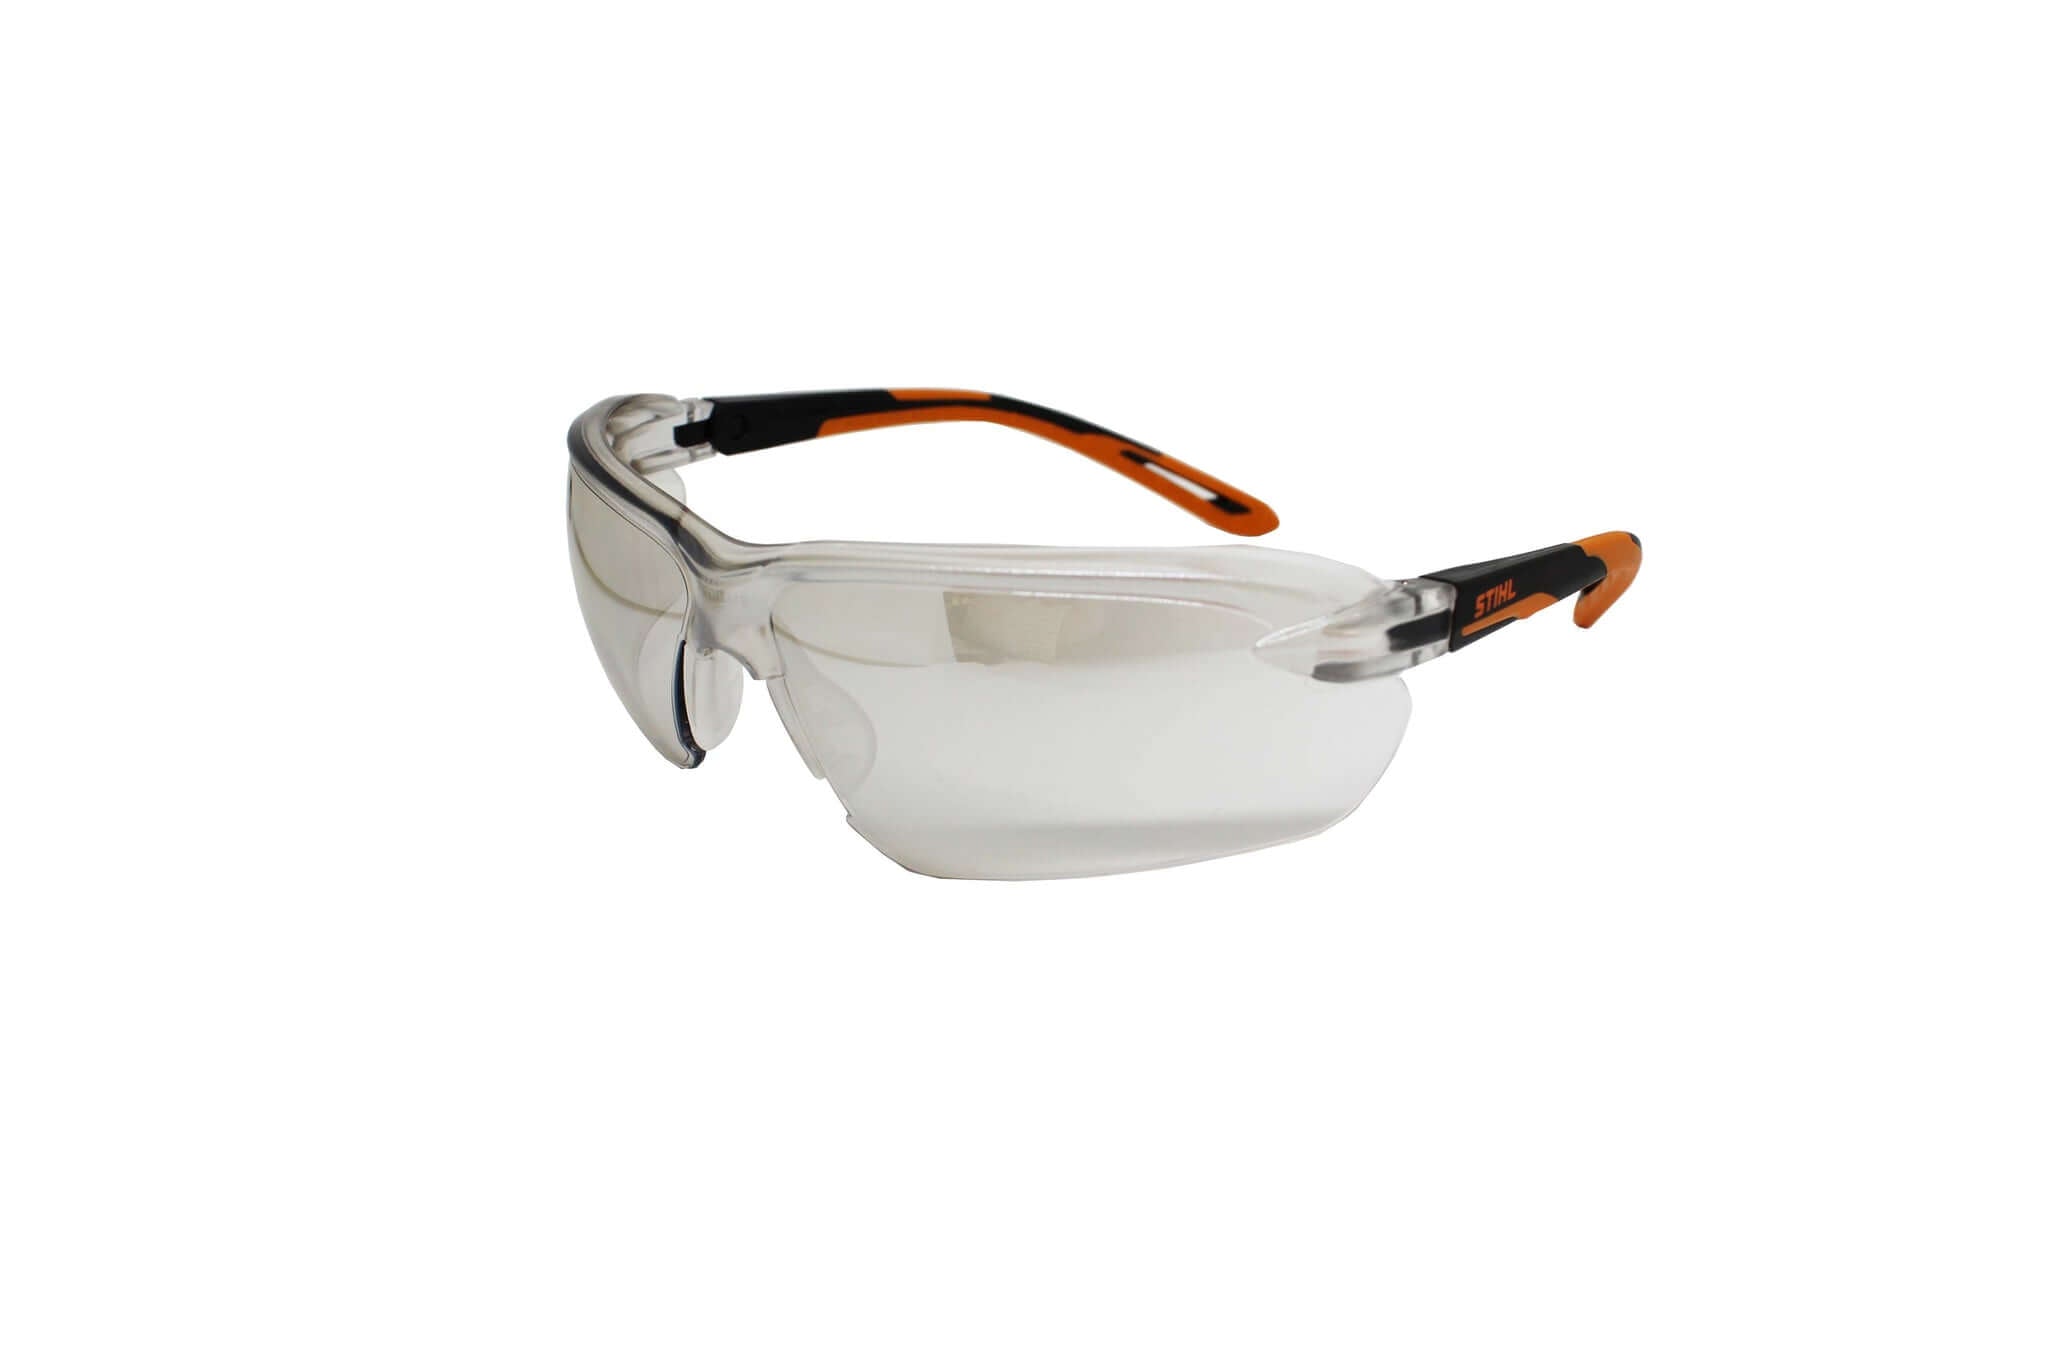 Stihl Safety Glasses (Assorted Styles)